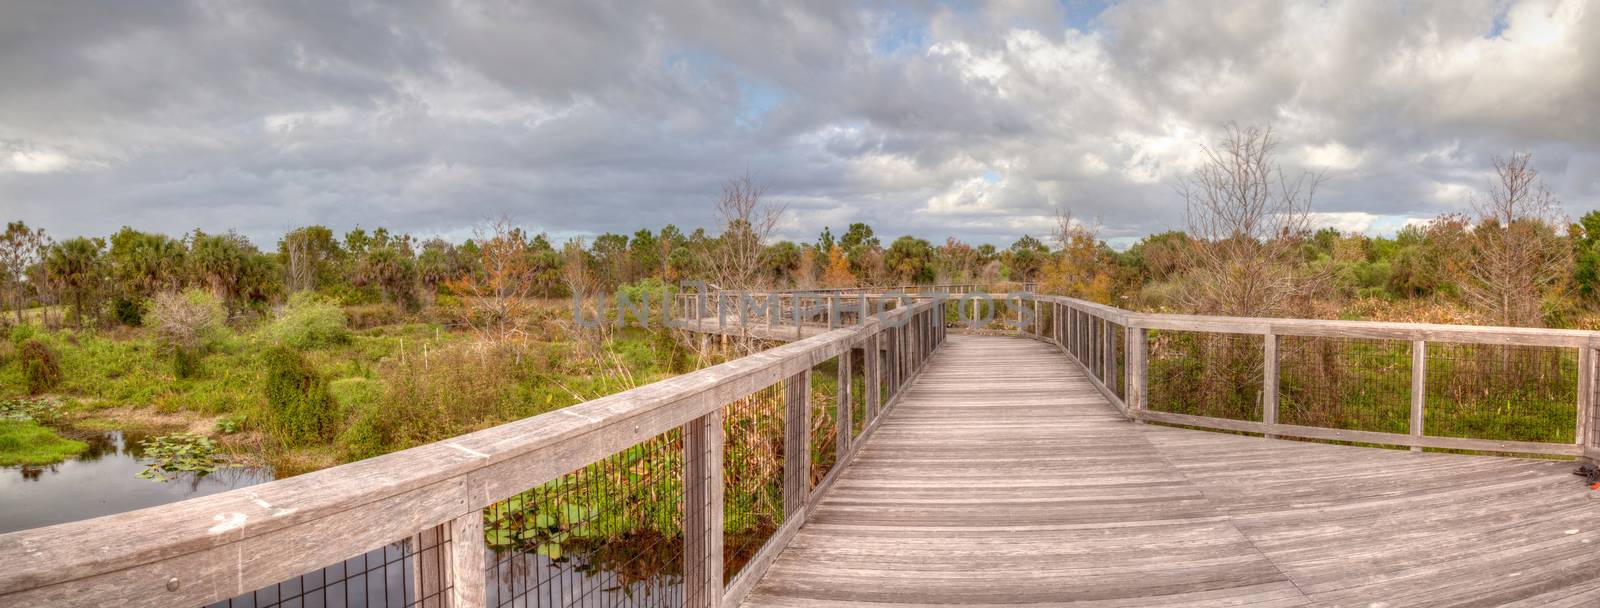 Wooden secluded, tranquil boardwalk along a marsh pond by steffstarr